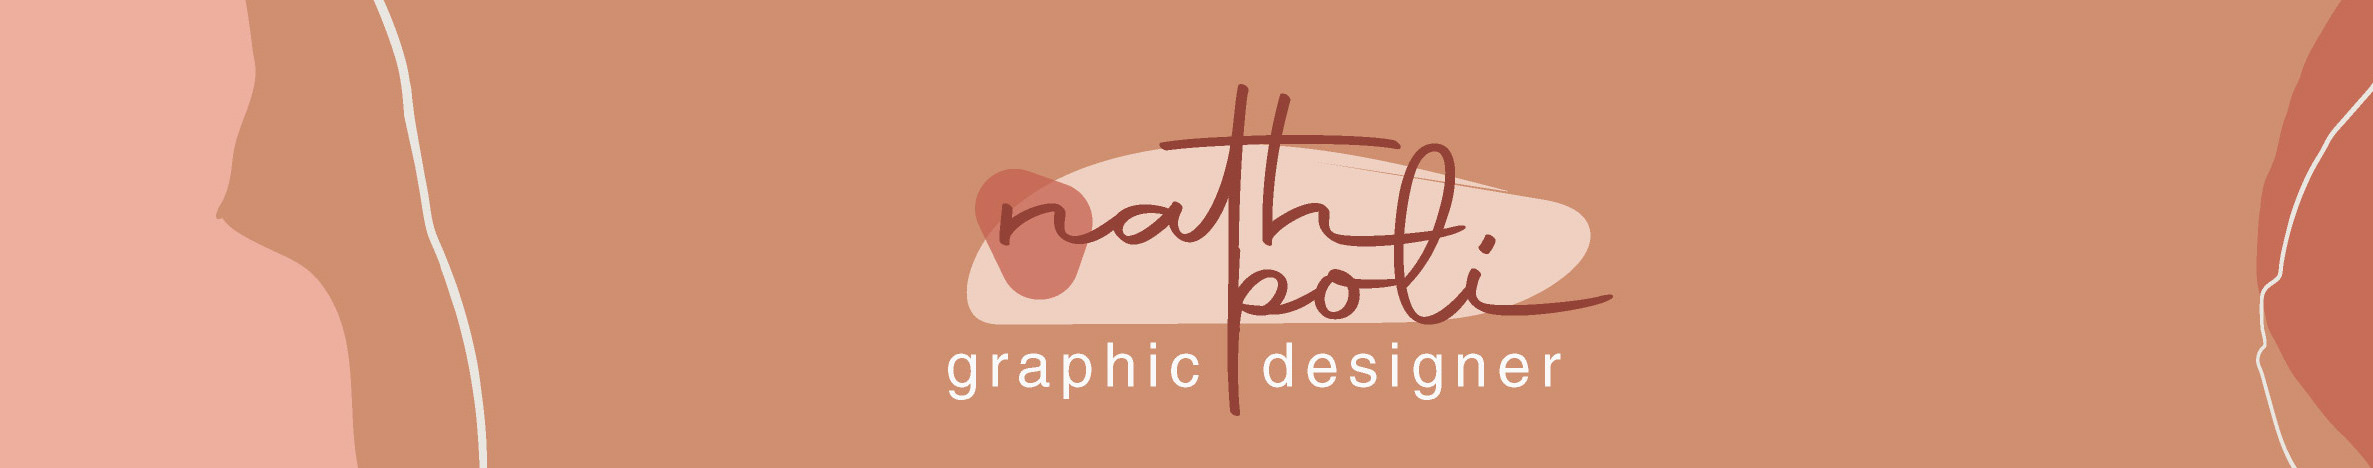 Banner profilu uživatele Nathália Policarpo